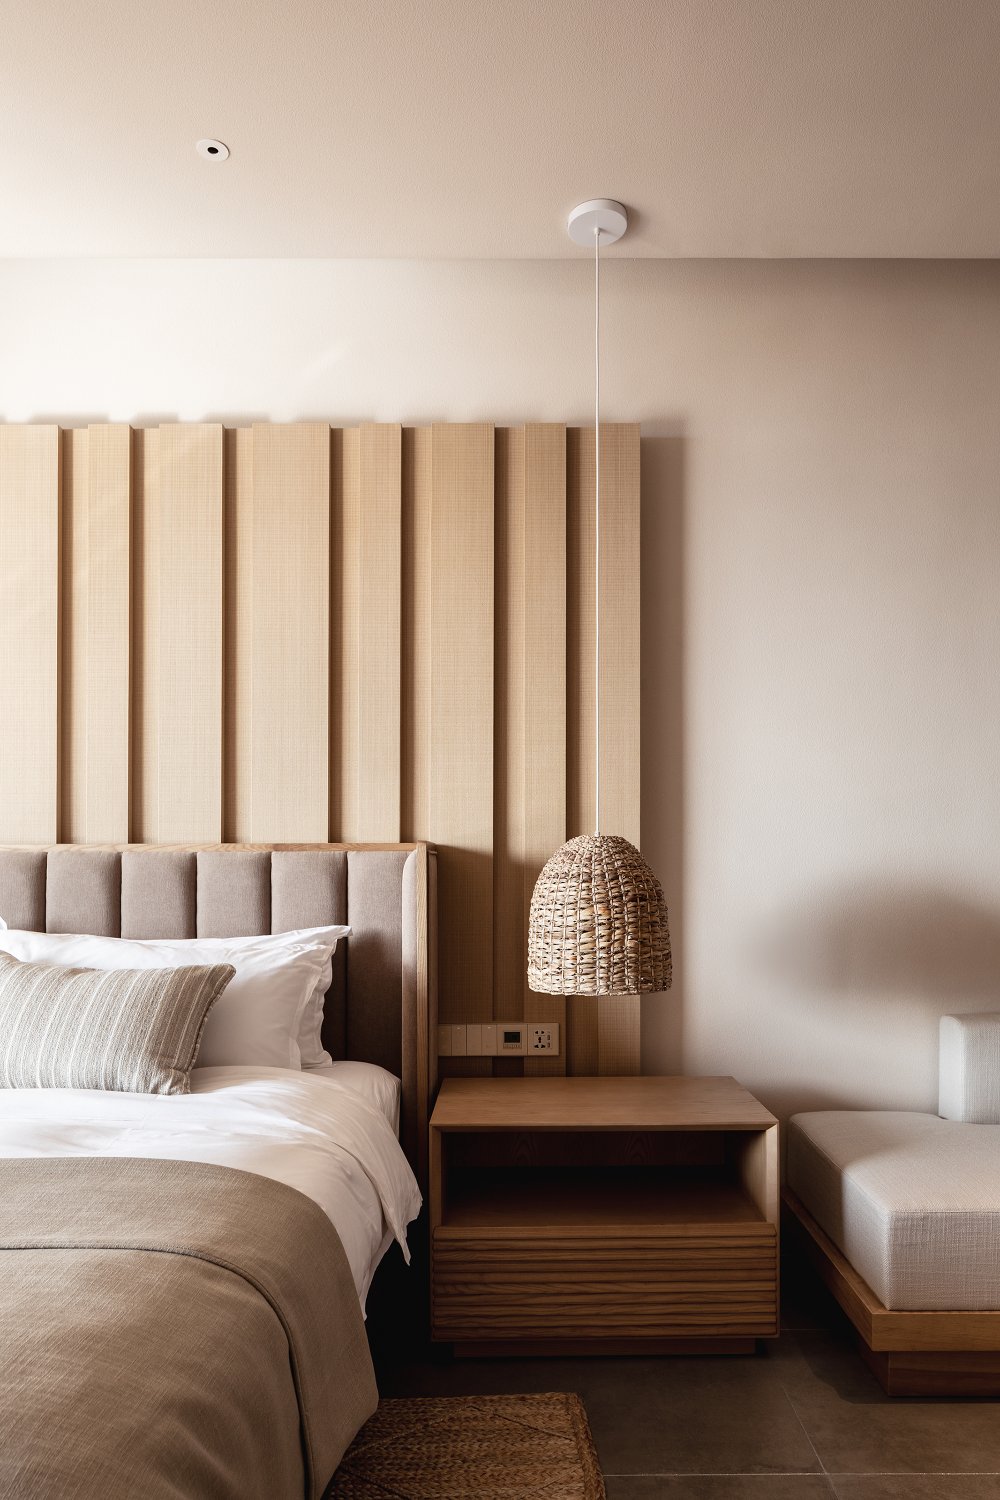 Latest luxury hotel room furniture hotel bedroom wardrobe designs